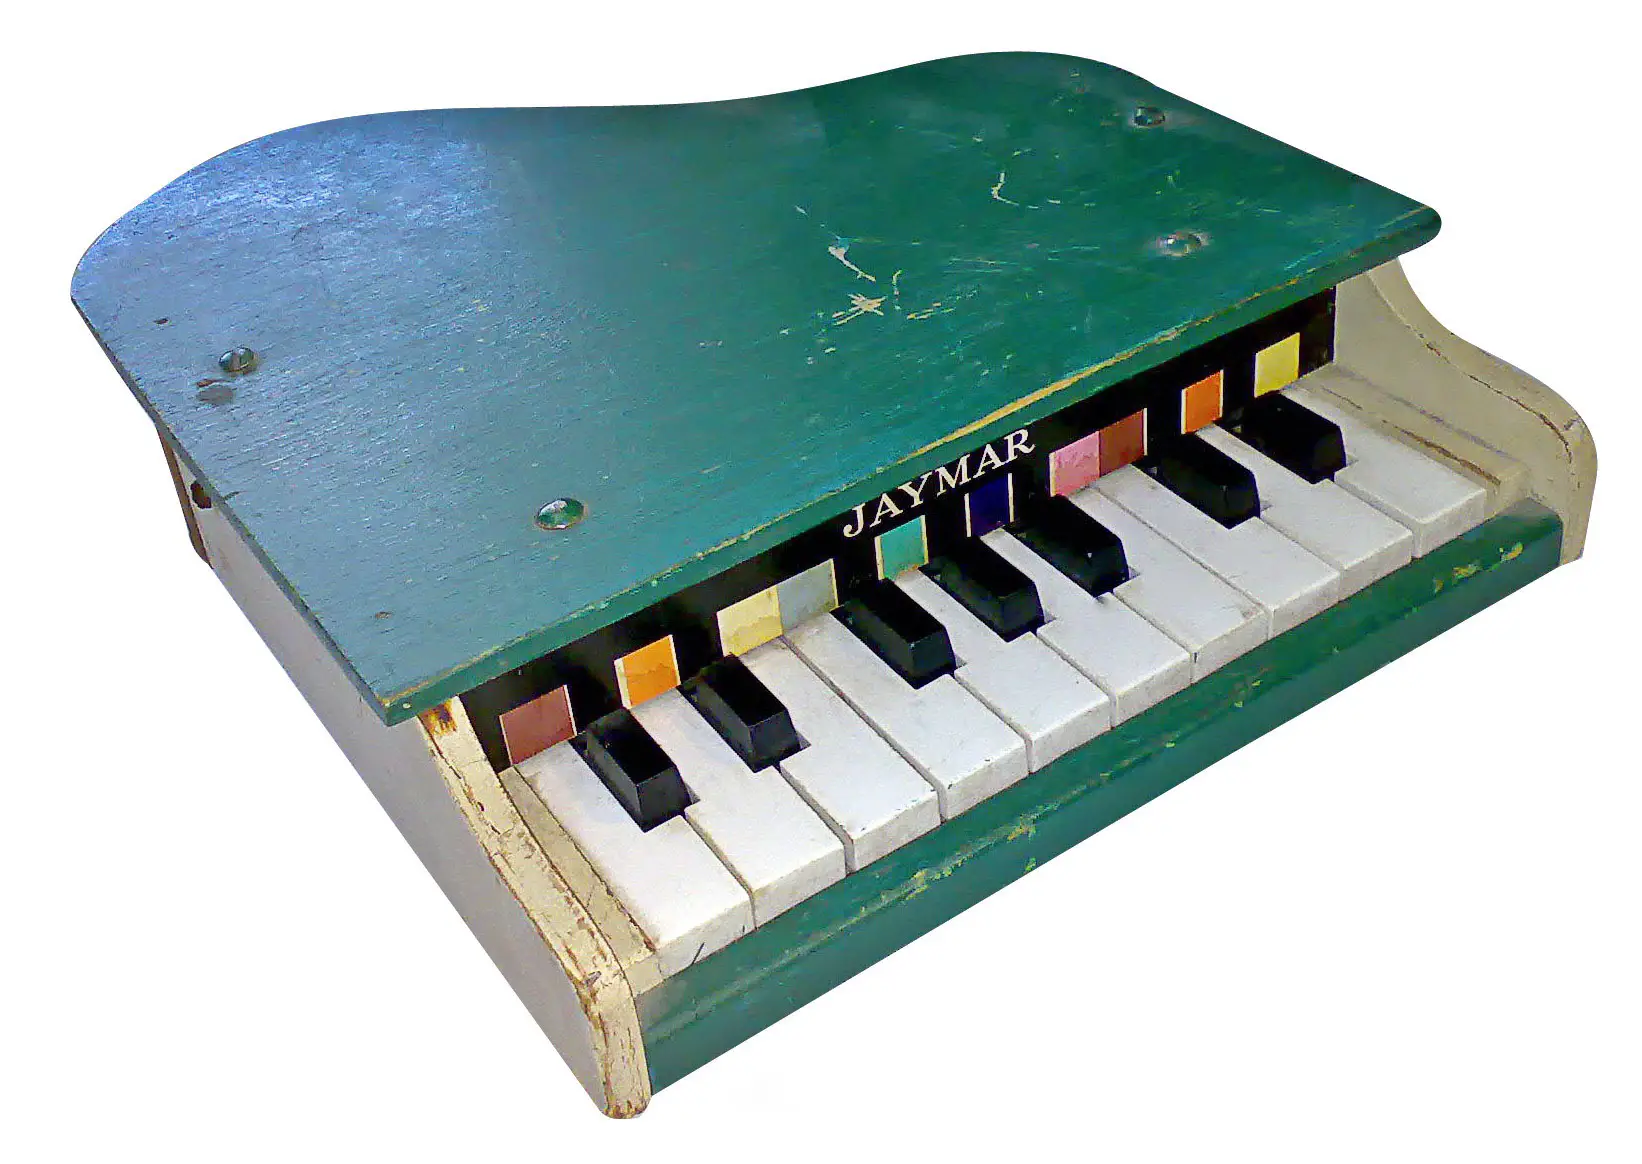 jaymar-toy-piano